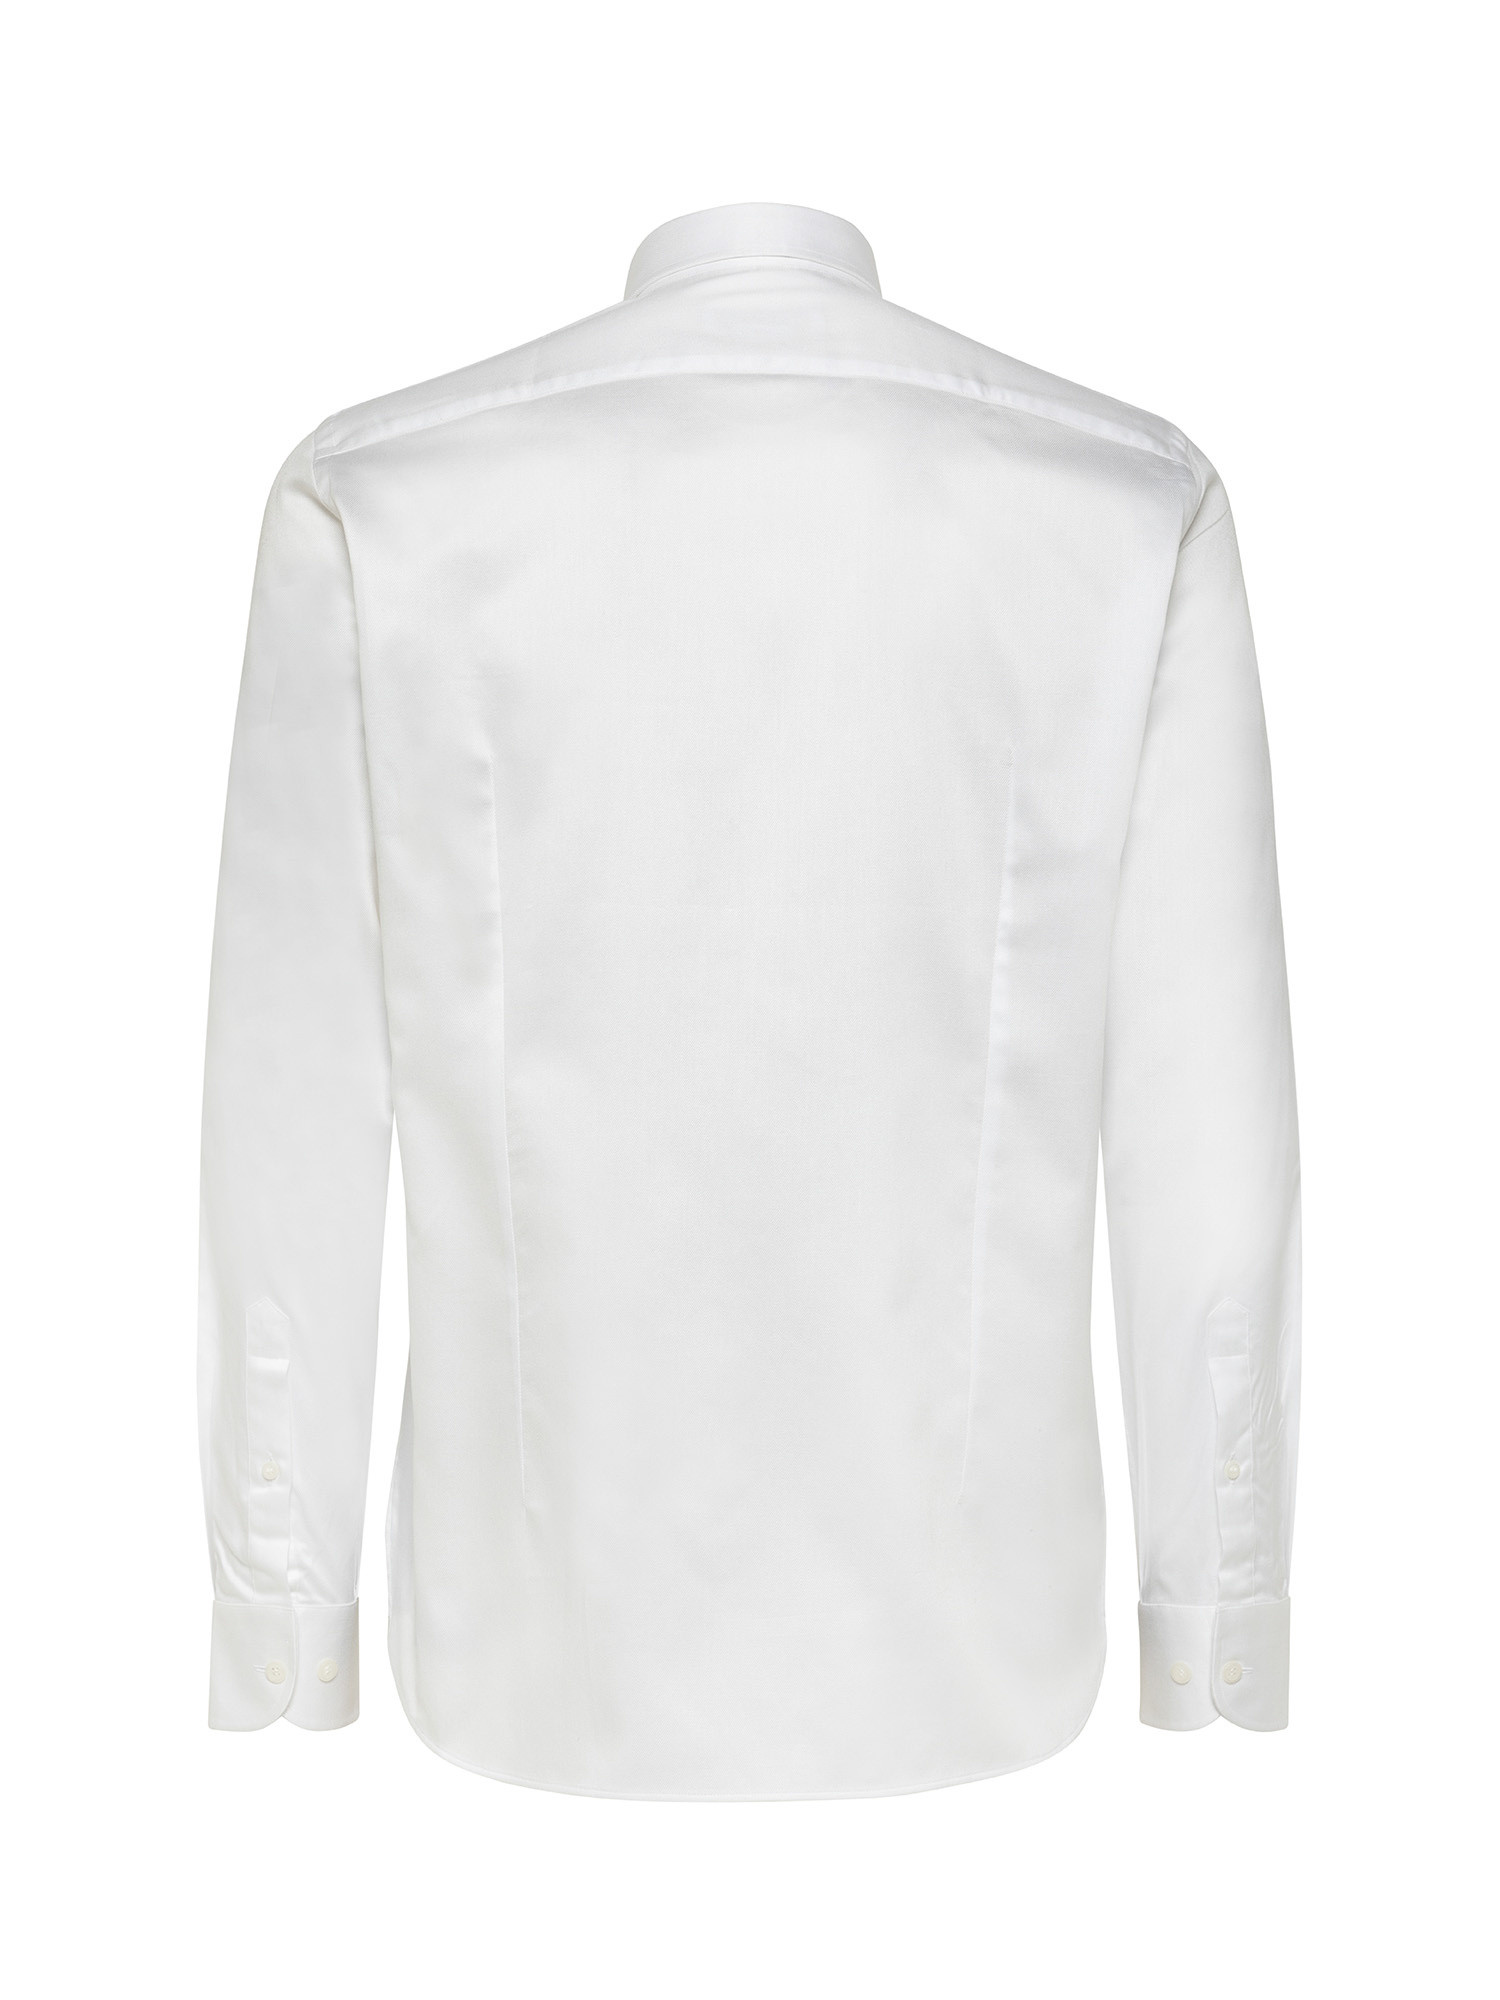 Camicia slim fit in puro cotone, Bianco, large image number 2